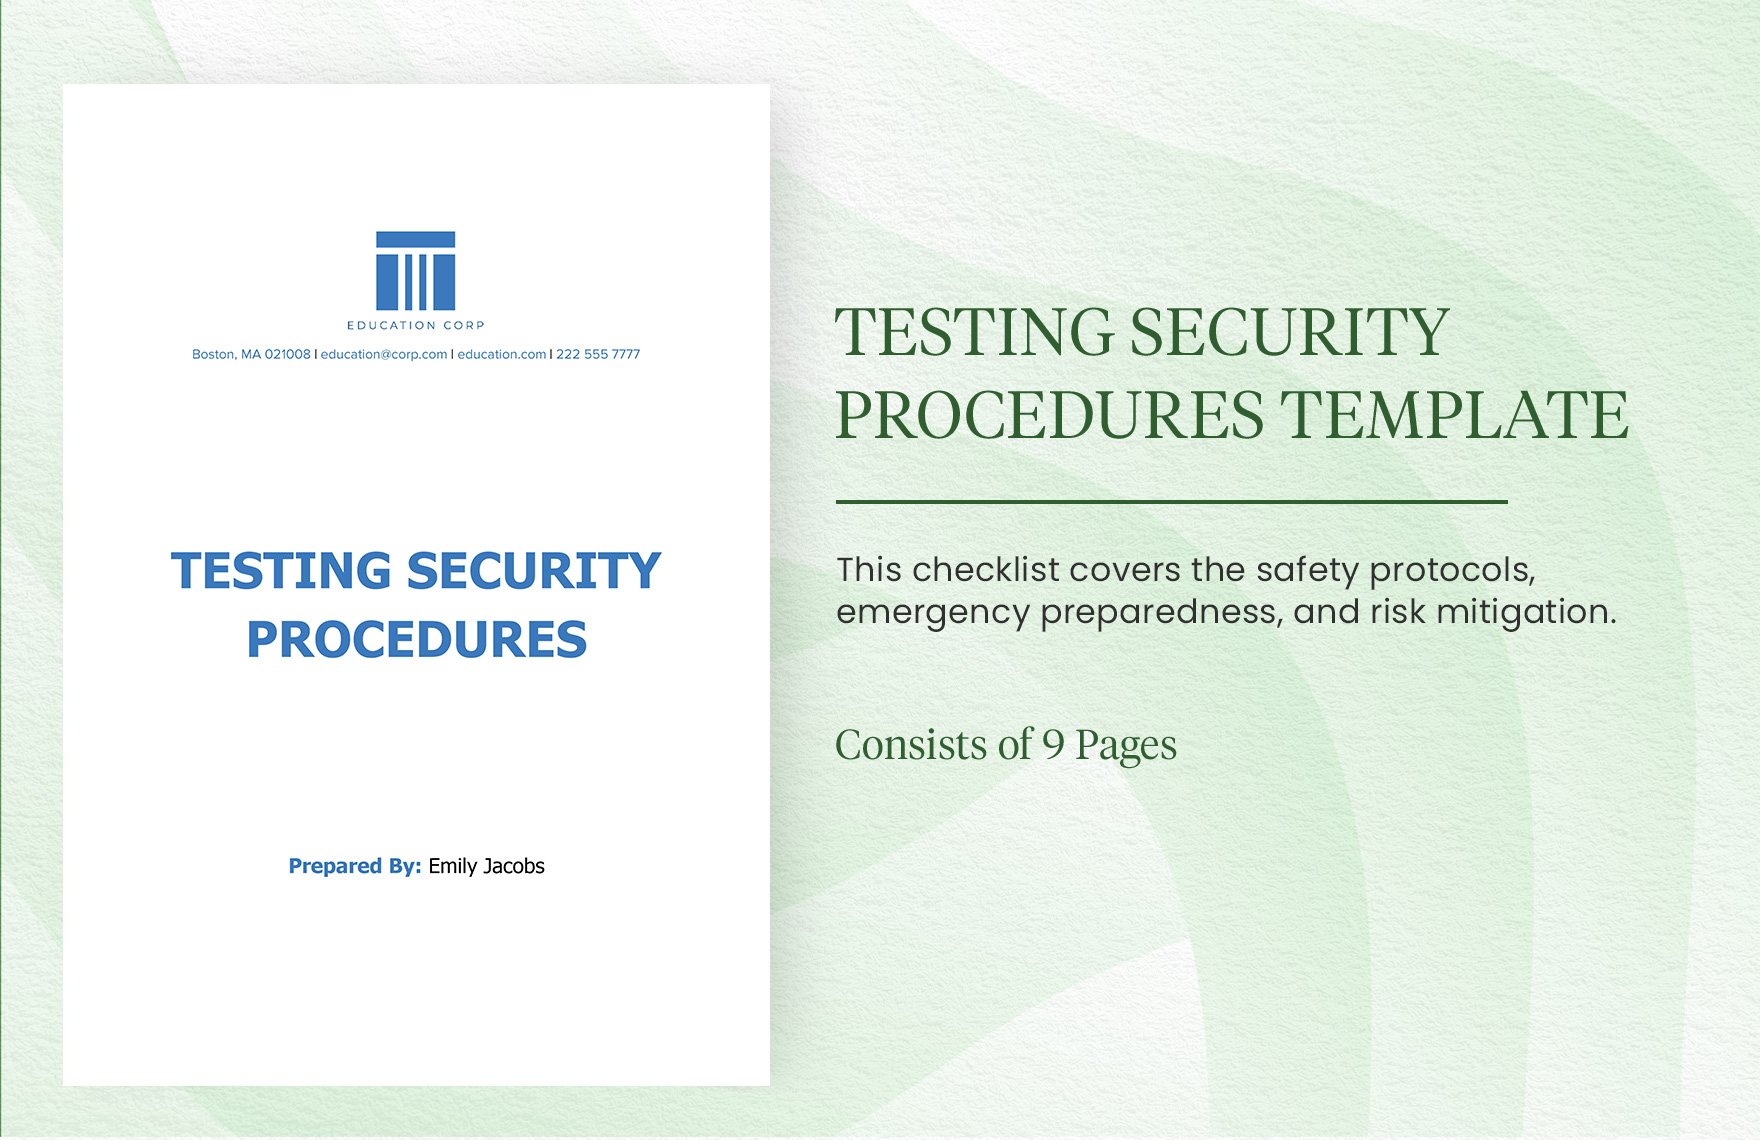 Testing Security Procedures Template